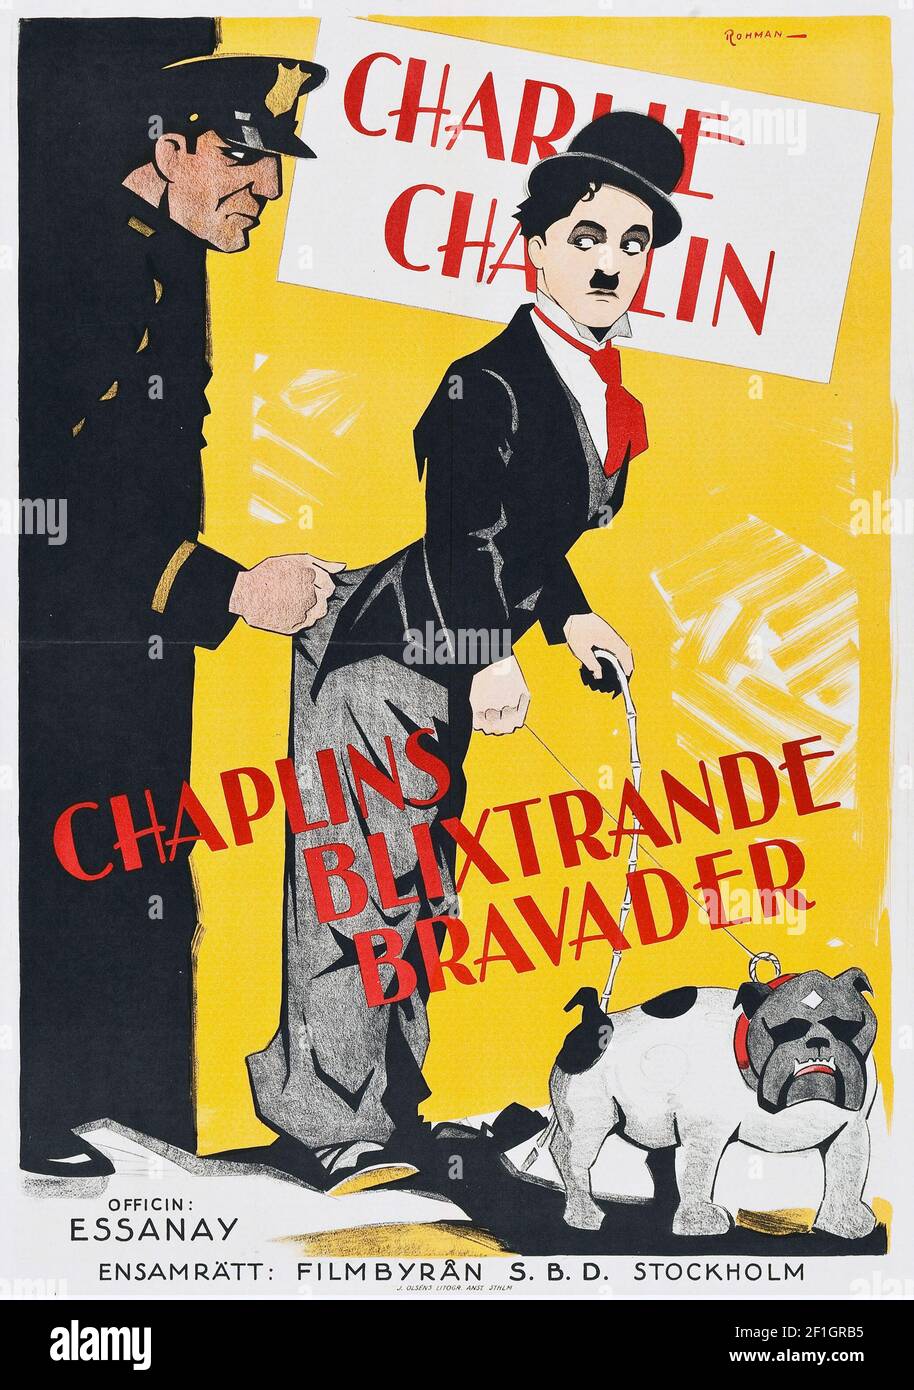 Charlie Chaplin Blixtrande bravader (The Tramp) svensk / swedish movie poster 1915 Stock Photo